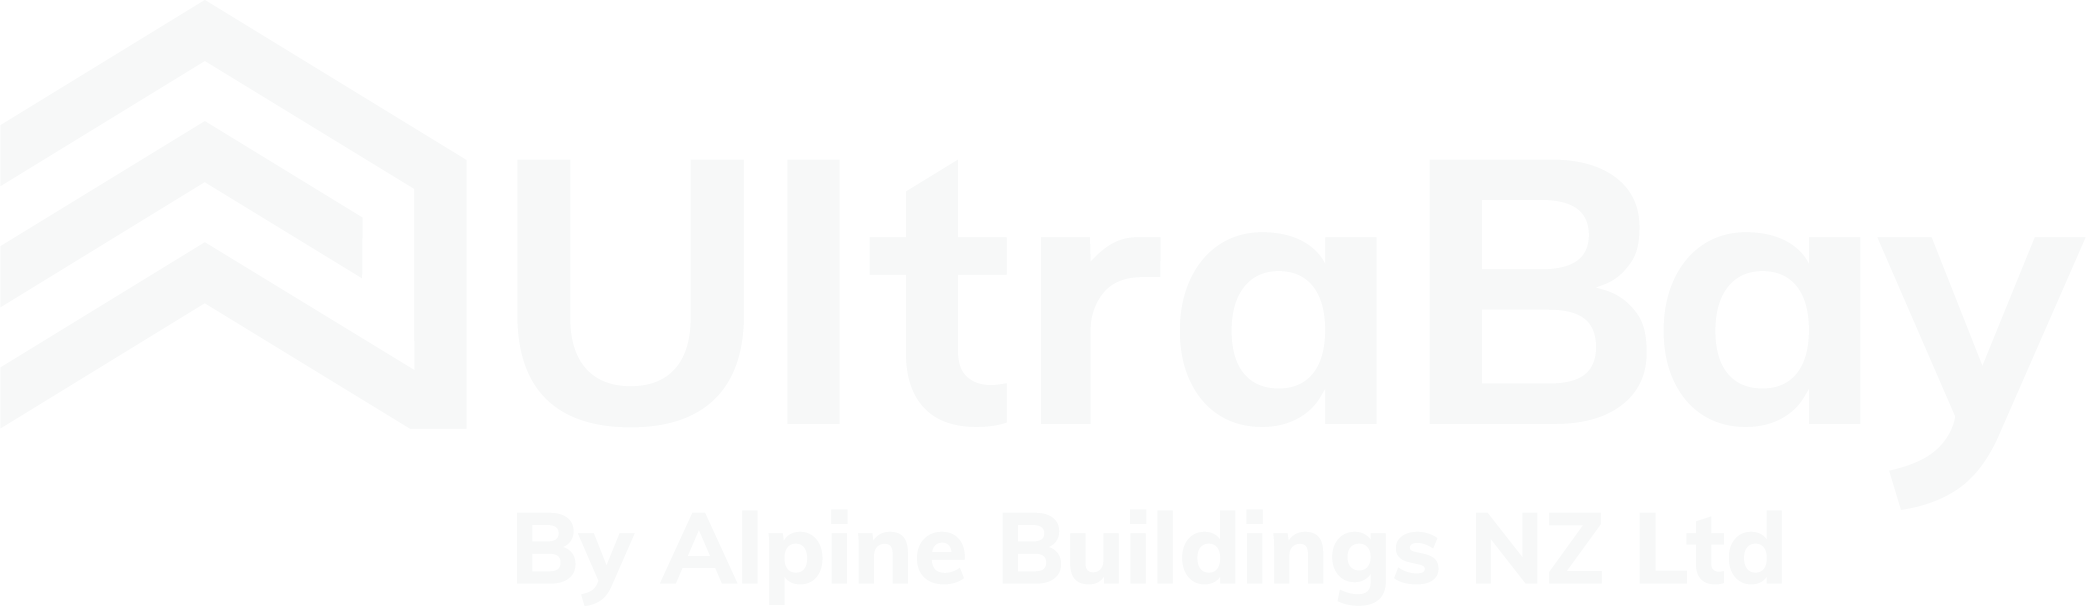 UltraBay by Alpine Buildings